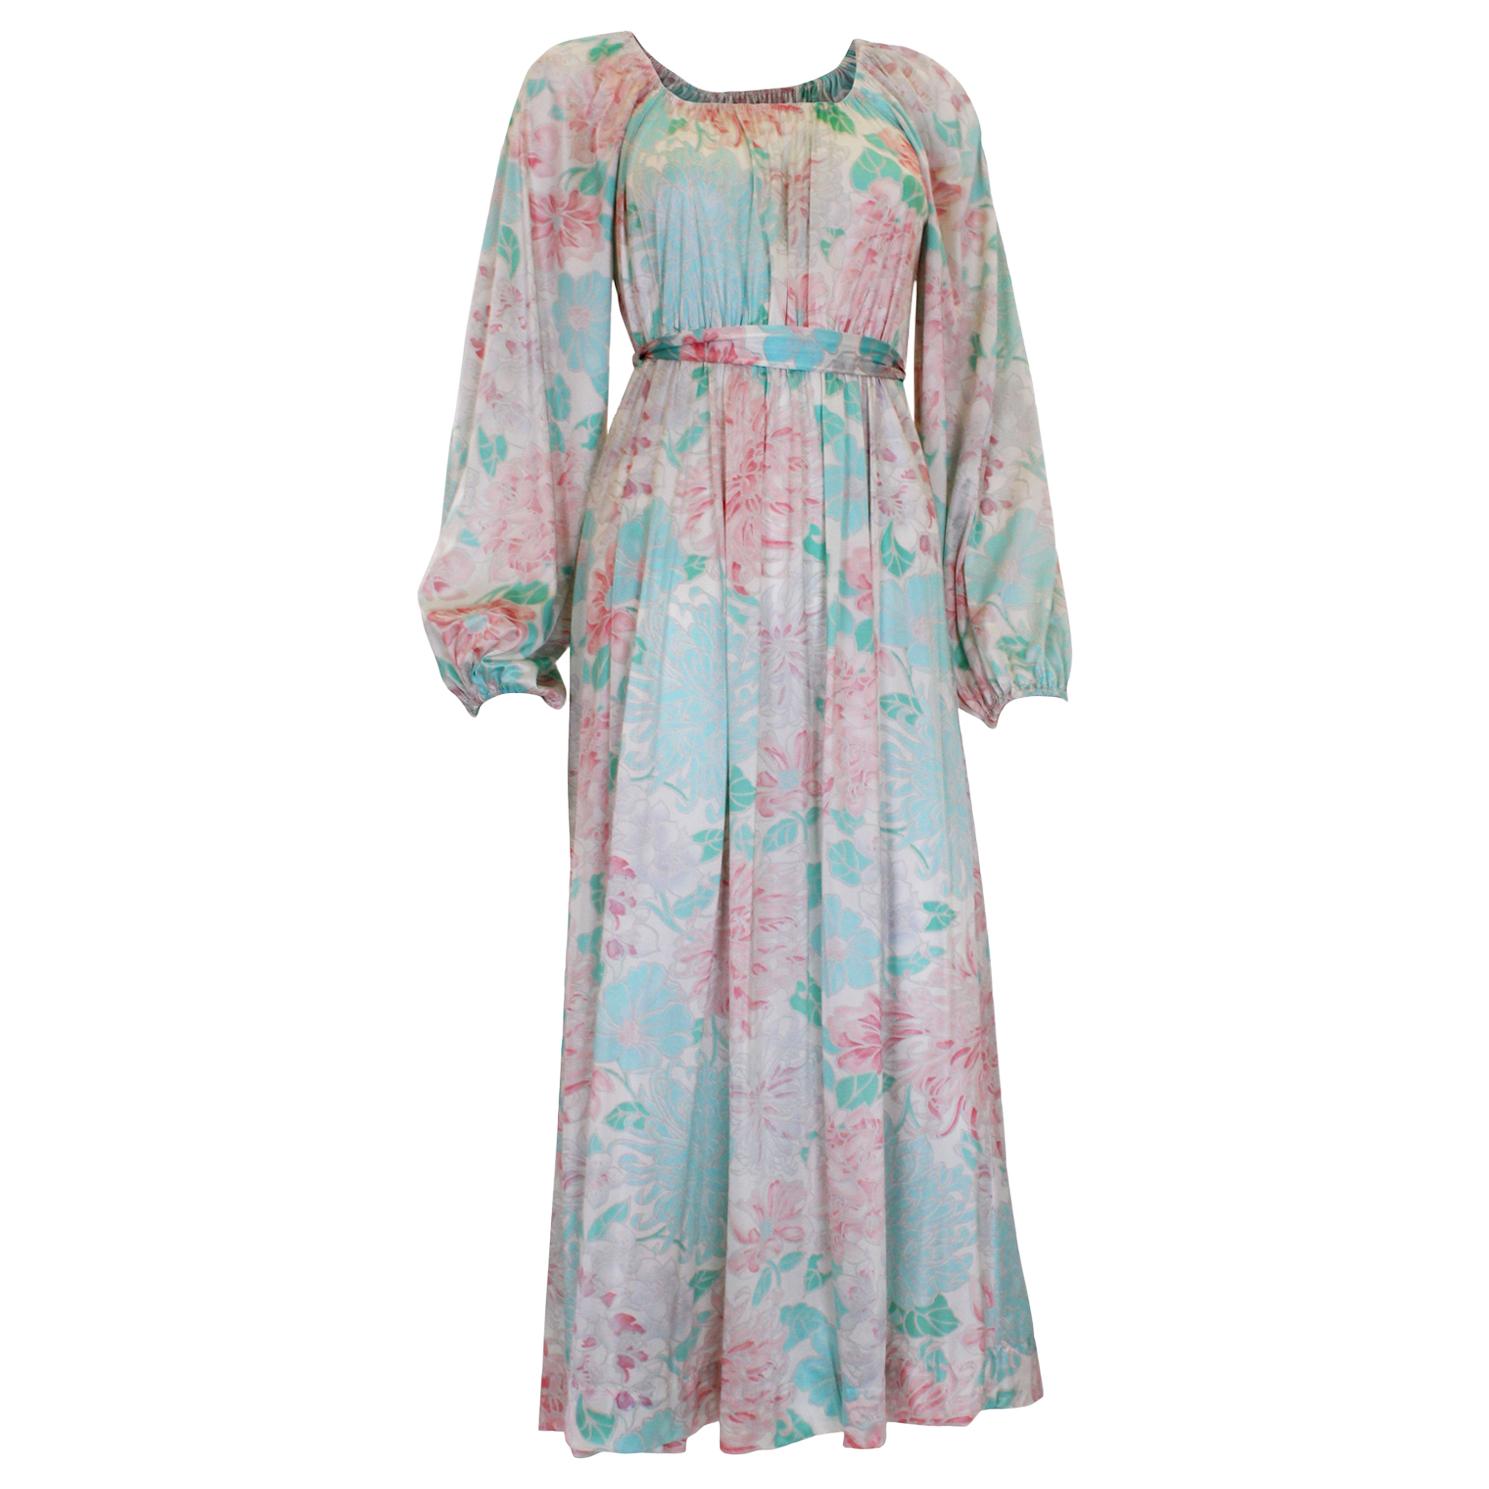 Vintage 1970s Pastel Coloured Floral Print Jersey Dress For Sale